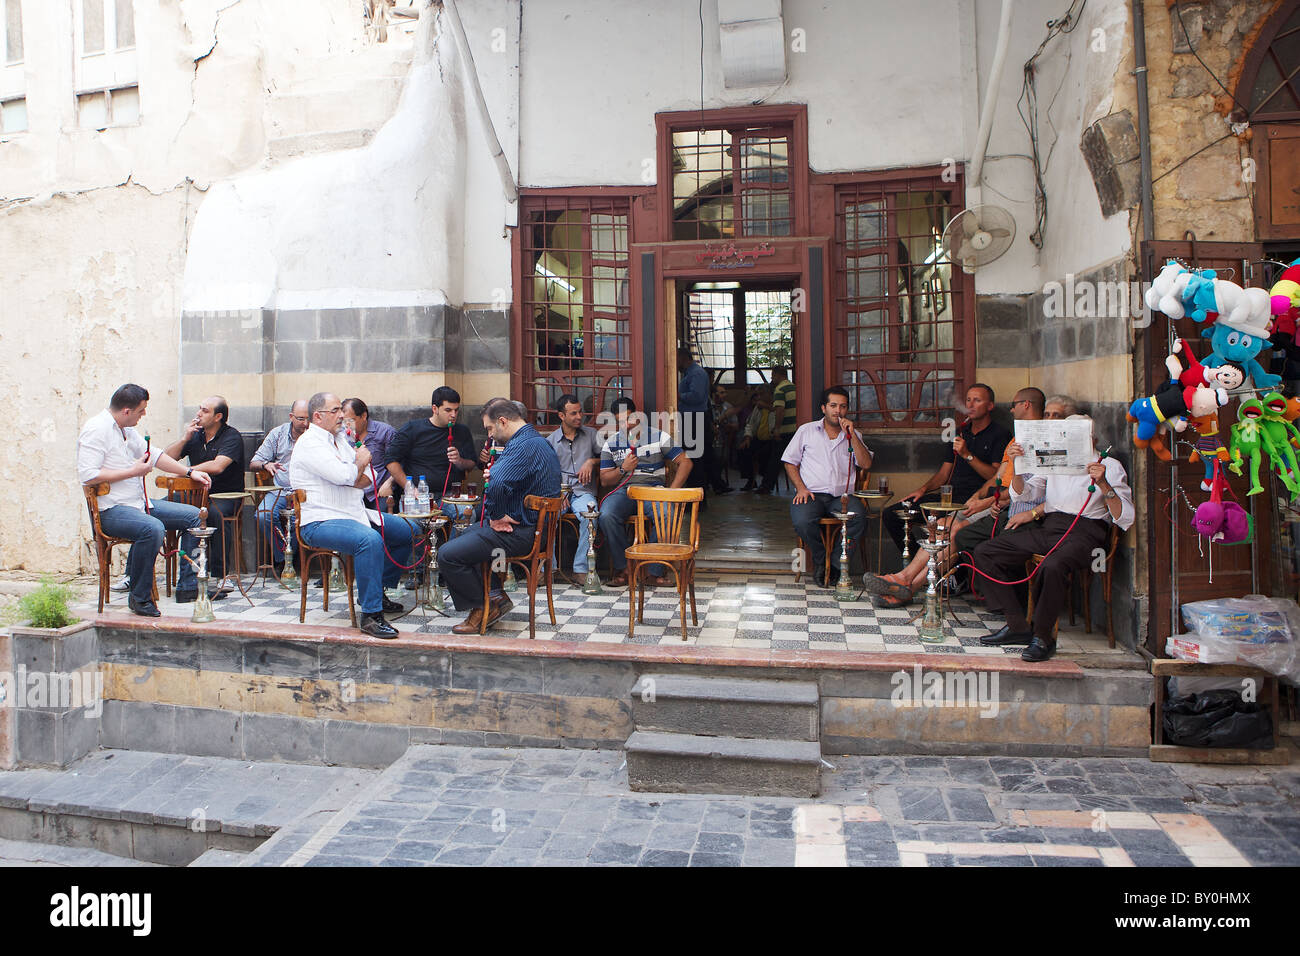 Syrian men smoking shisha pipes in Old City, Damascus, Syria Stock Photo